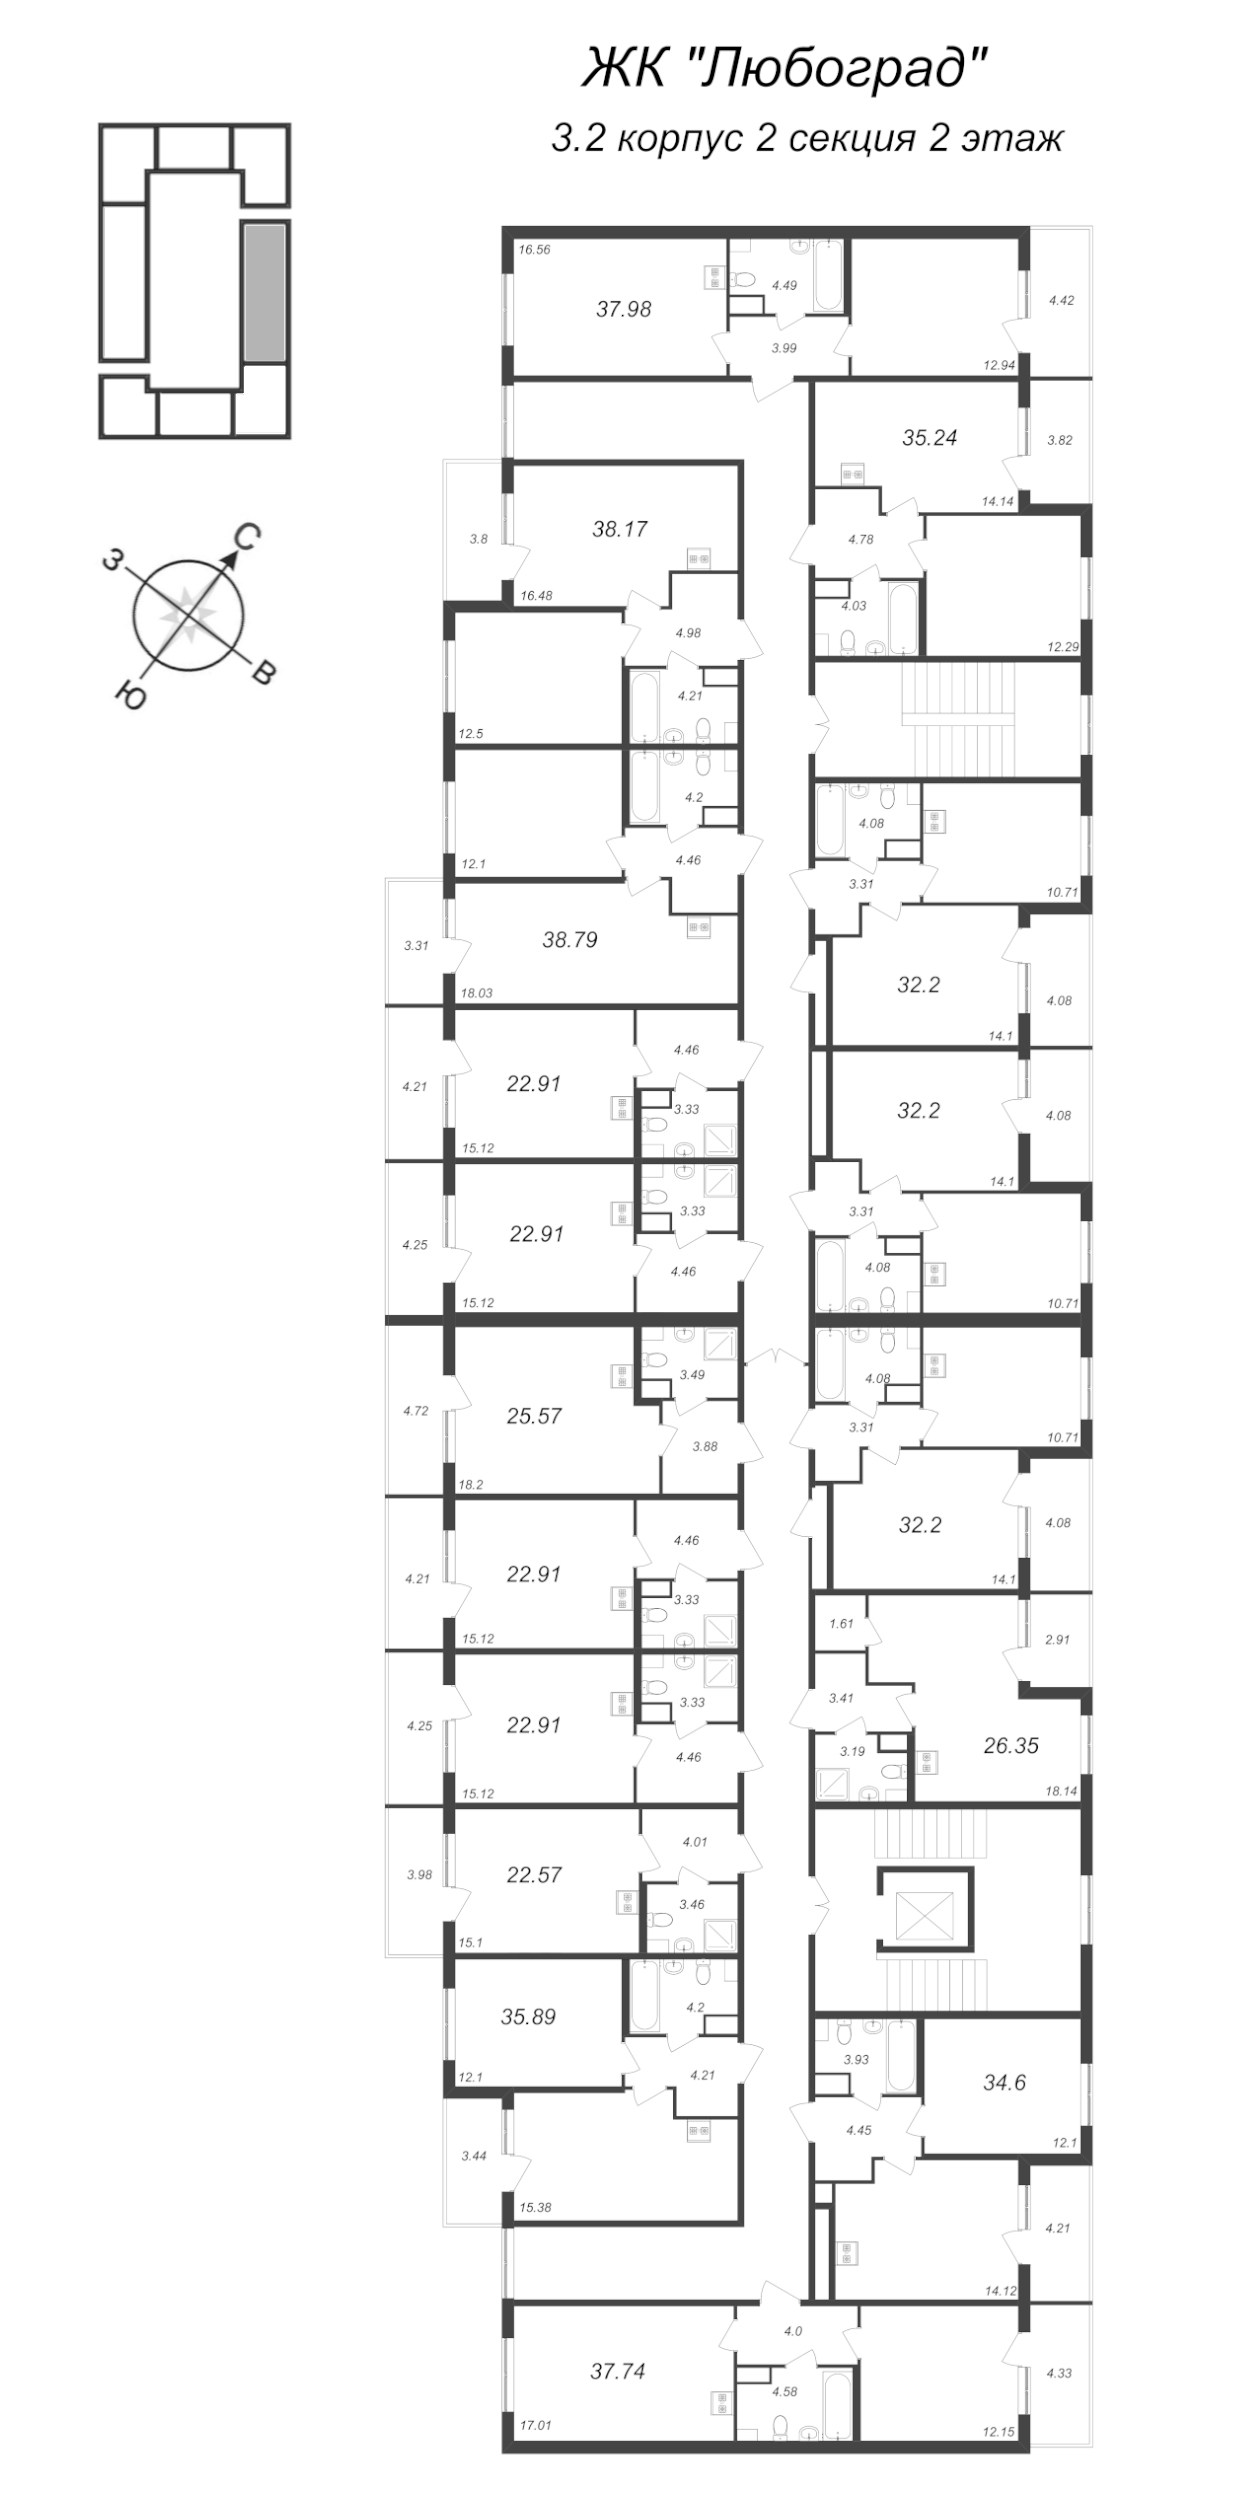 2-комнатная (Евро) квартира, 35.89 м² - планировка этажа